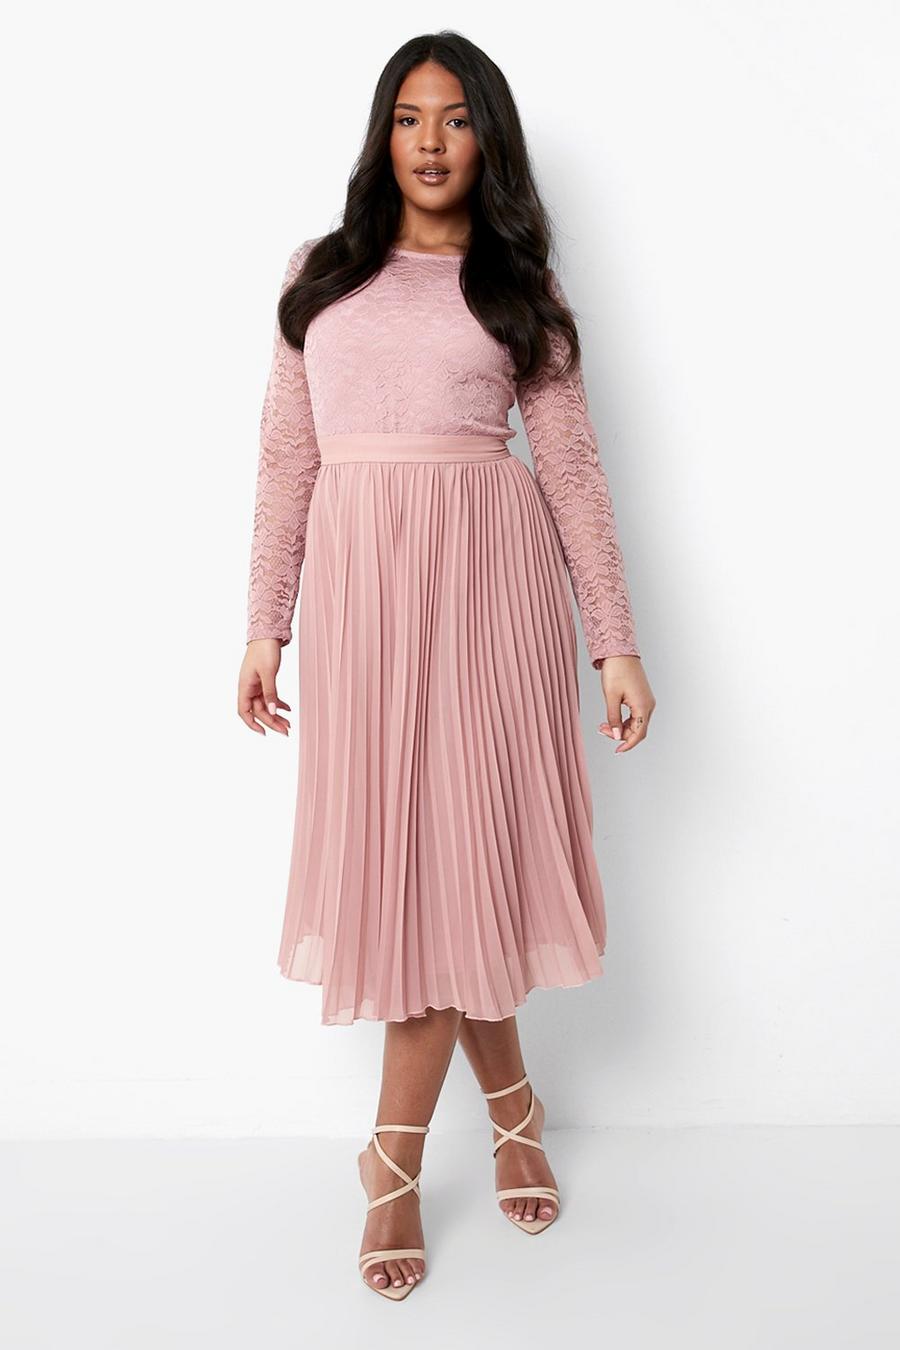 Blush rose Plus Lace Top & Chiffon Midi Skirt Co Ord